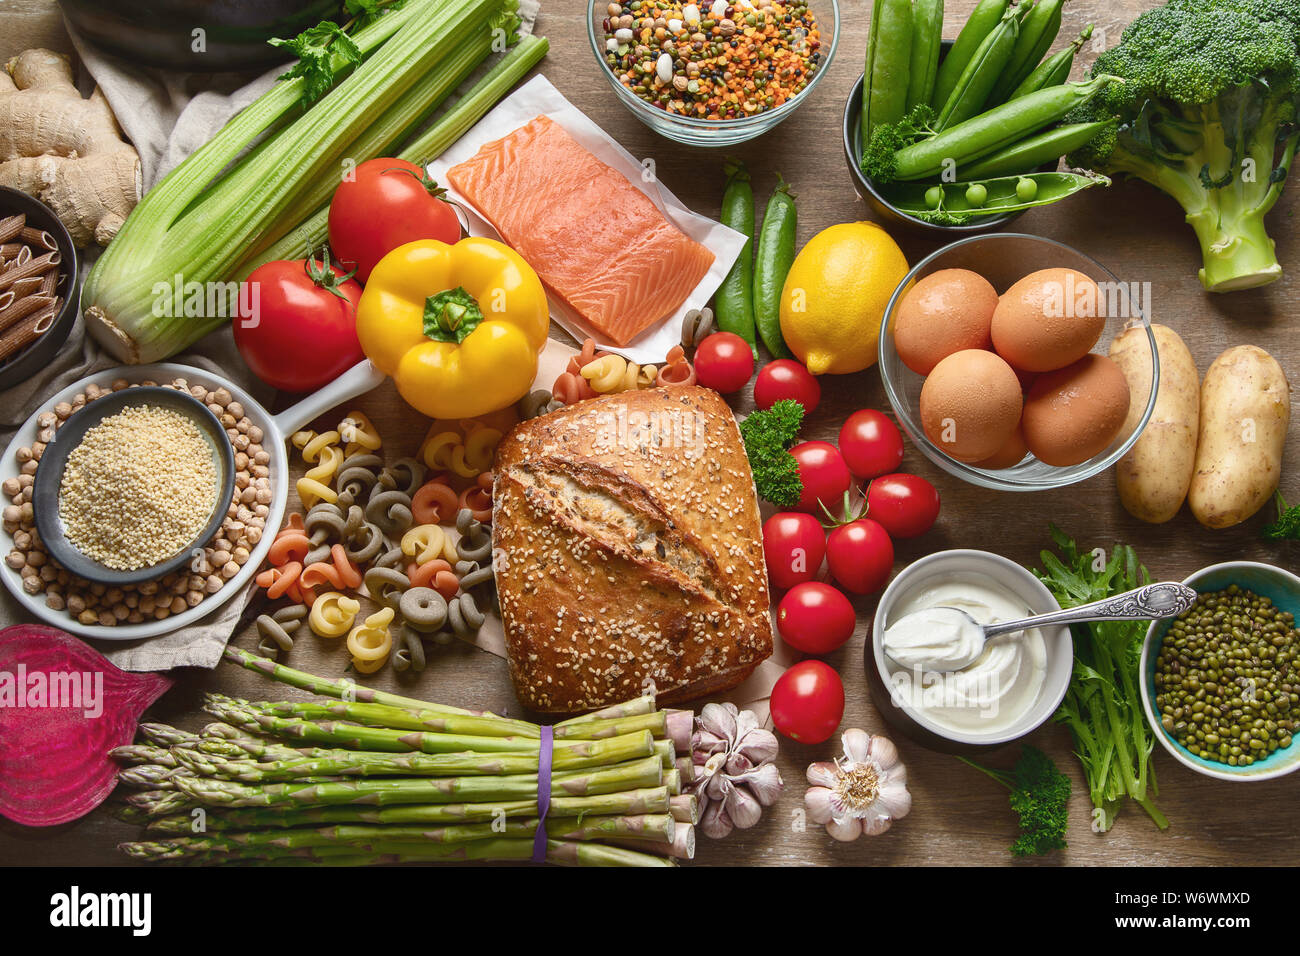 Healthy food. Balanced food cooking ingredients. Clean diet eating. Top view Stock Photo